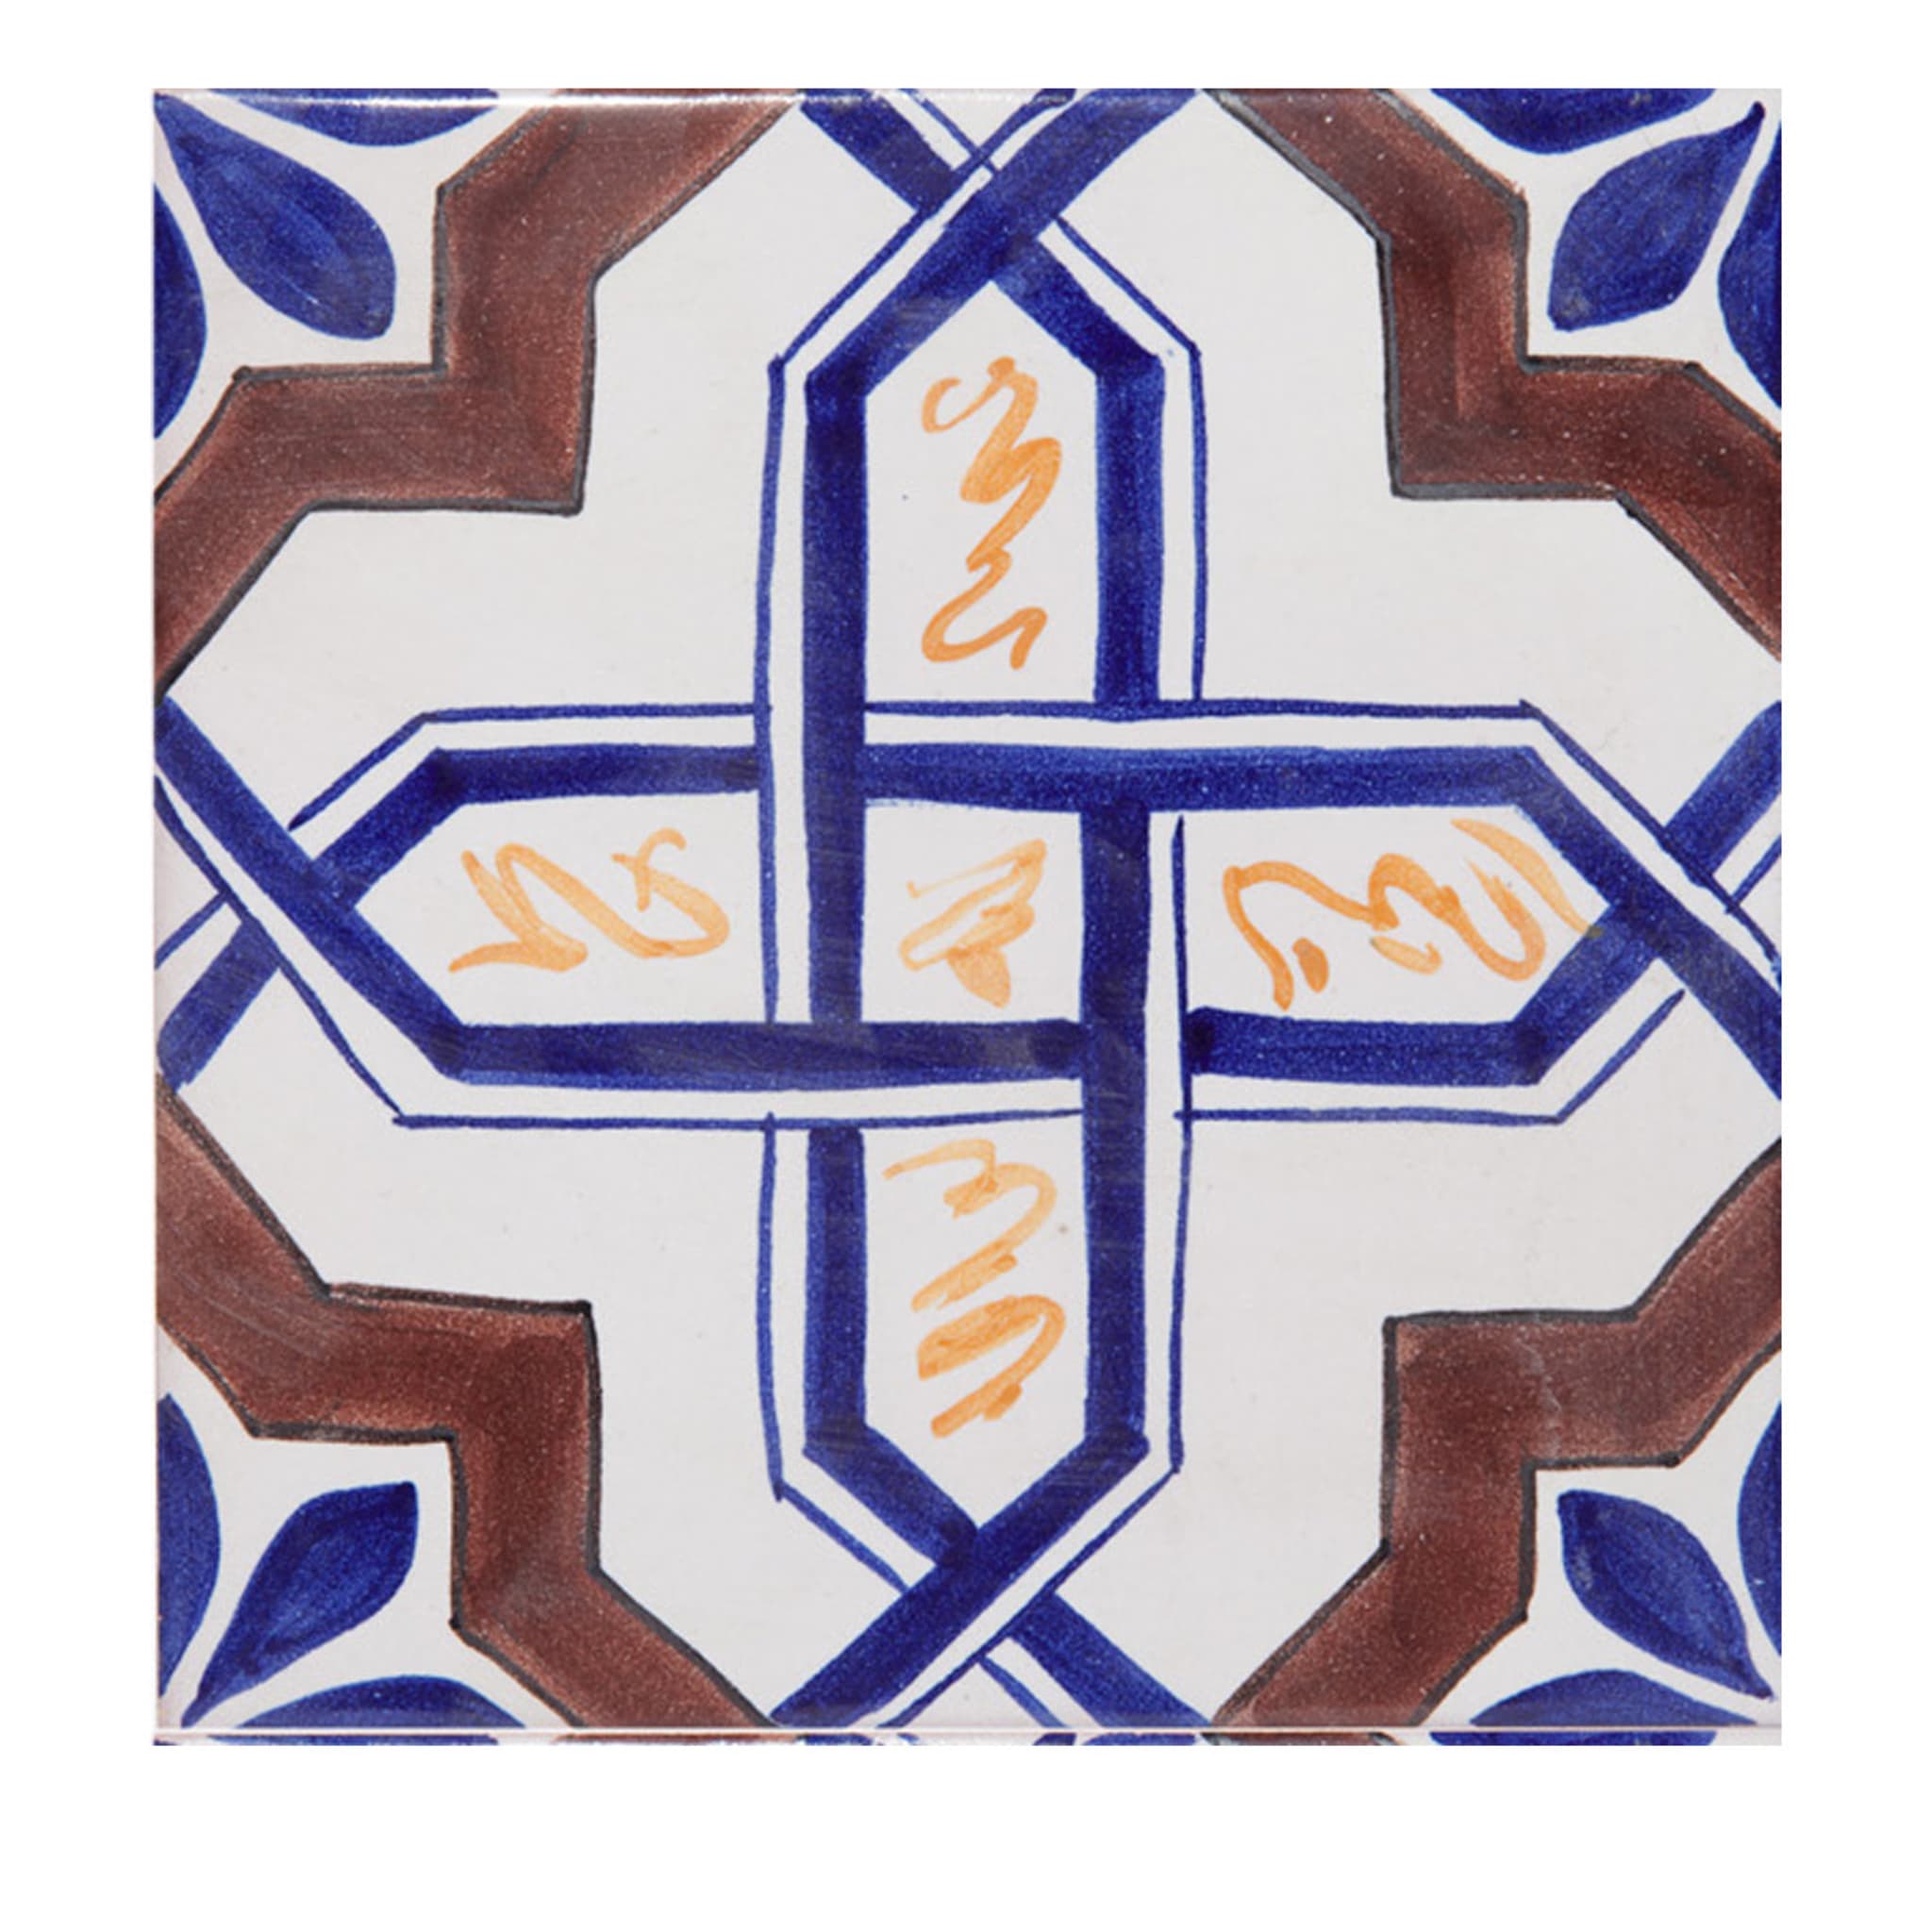 4 Century Cross Tiles - Alternative view 1